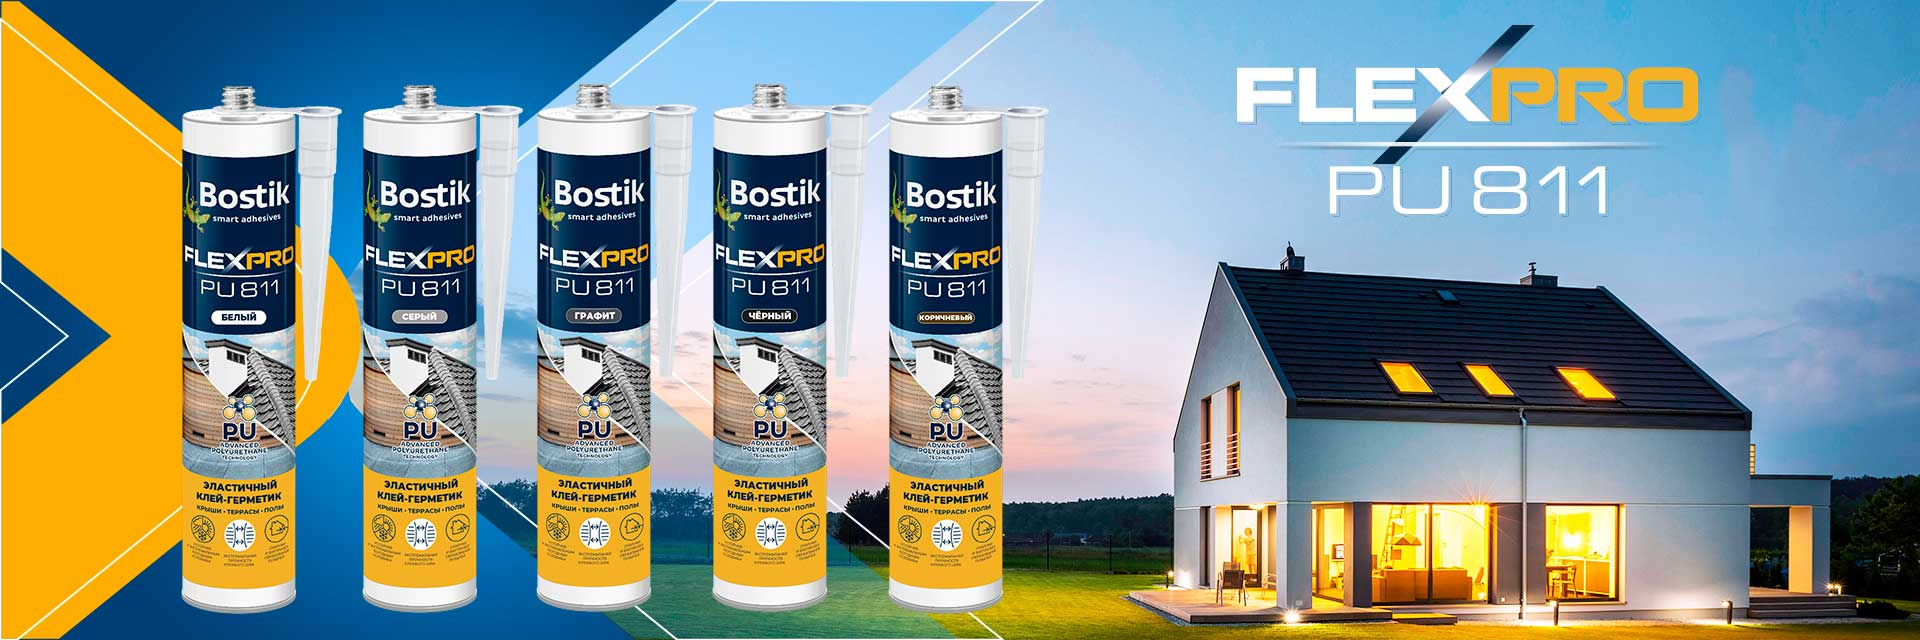 Bostik DIY Russia campaign flexpro banner image